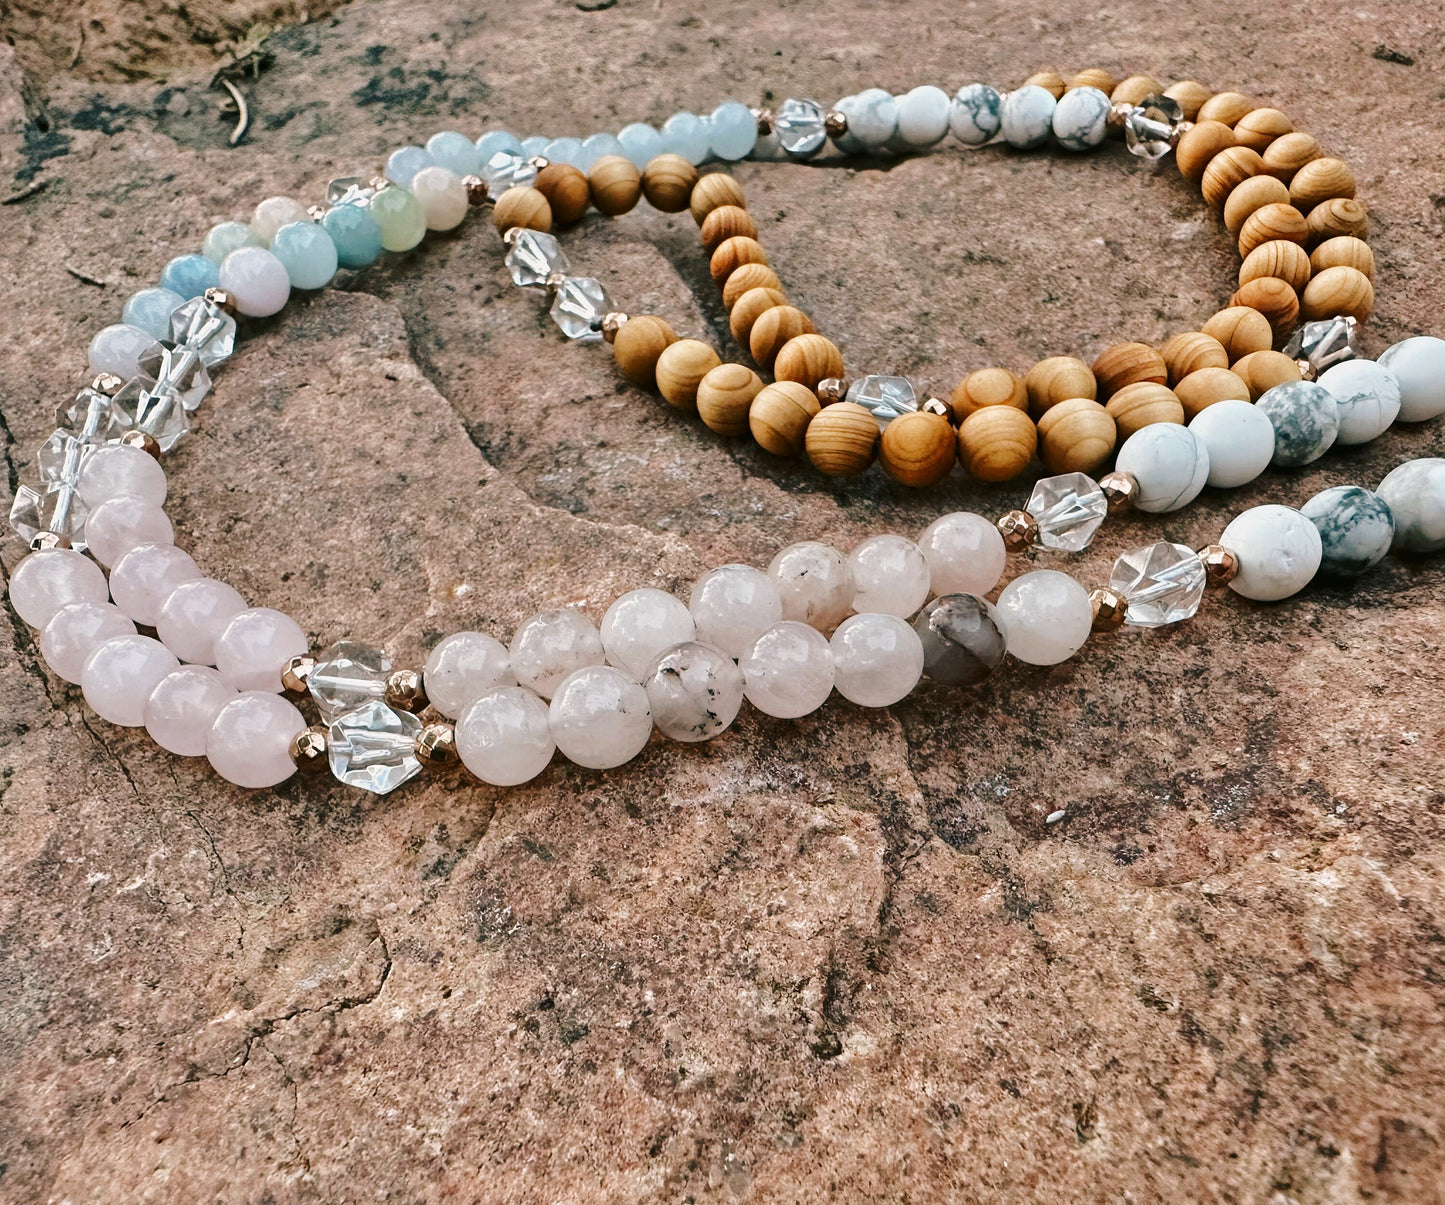 Emotional trauma healing Gemstone mala breakup recovery tool wood Mala necklace layered bracelet jewelry gift for her meditation yoga supply